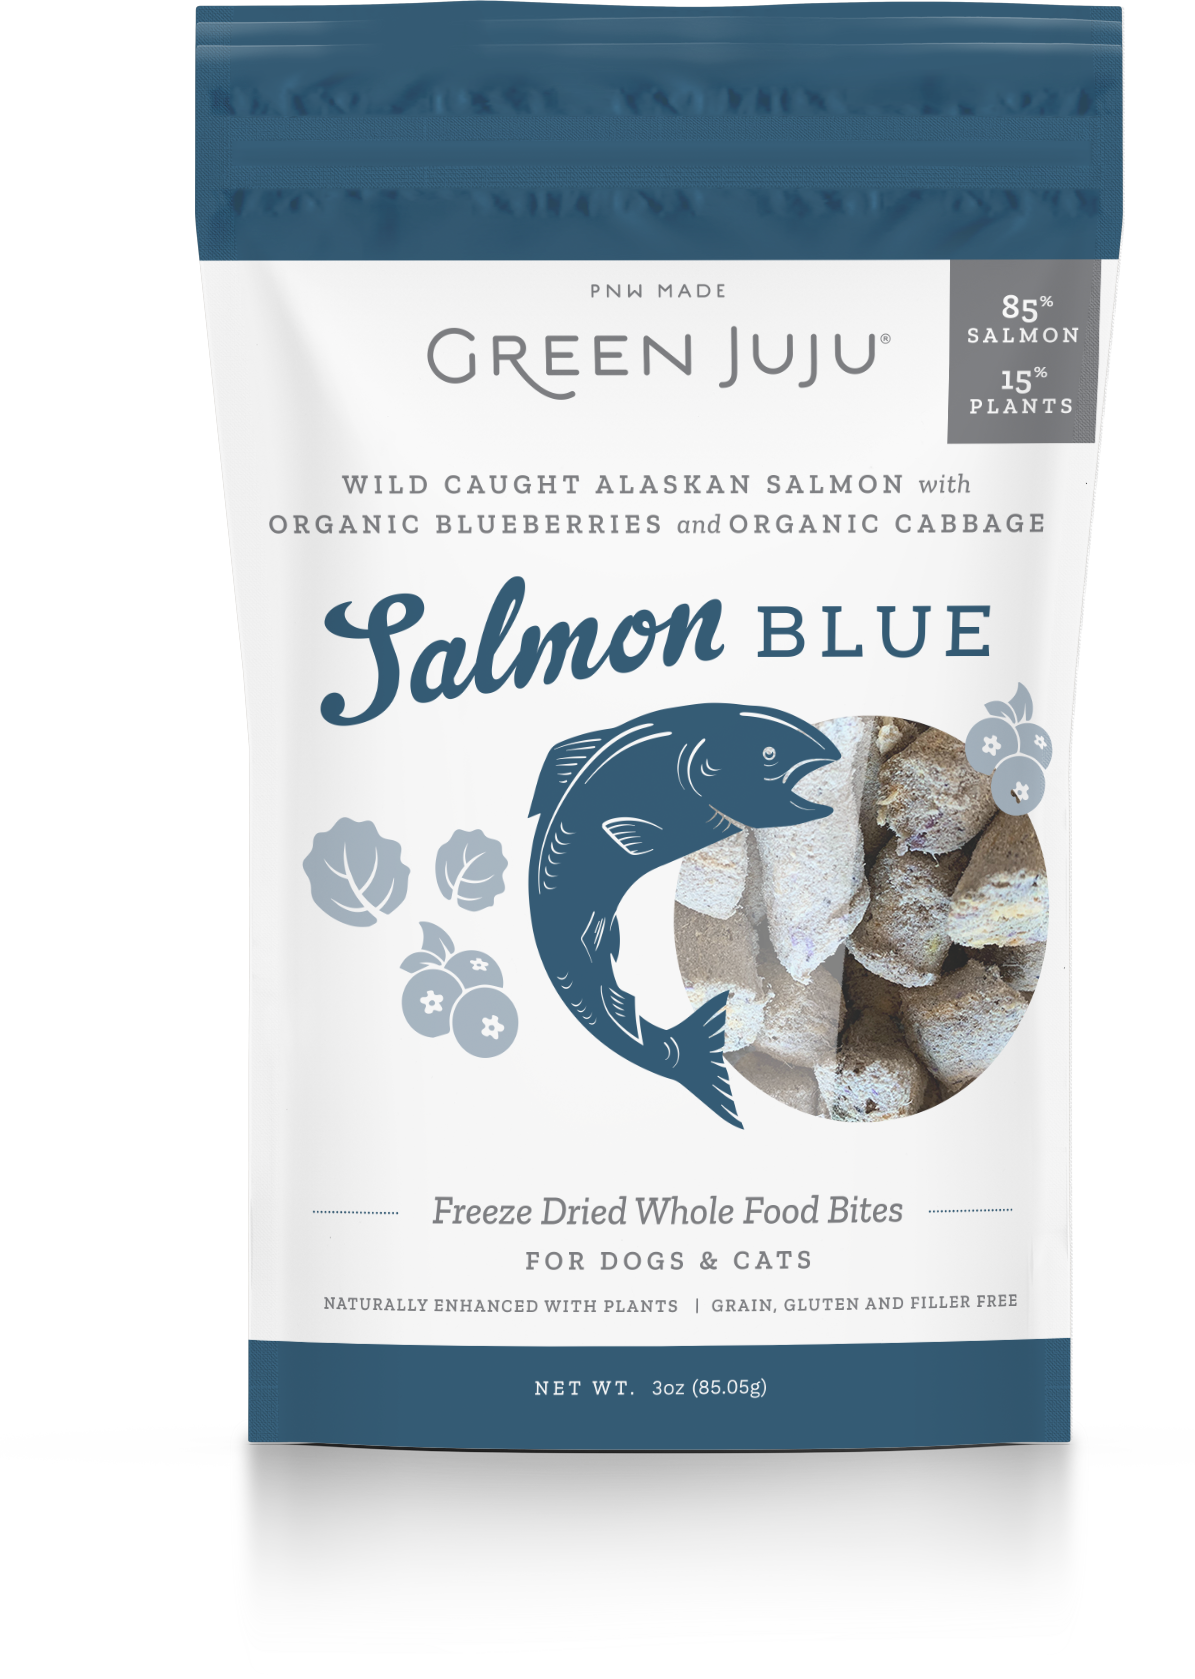 Green Juju: Salmon Blue Whole Food Bites